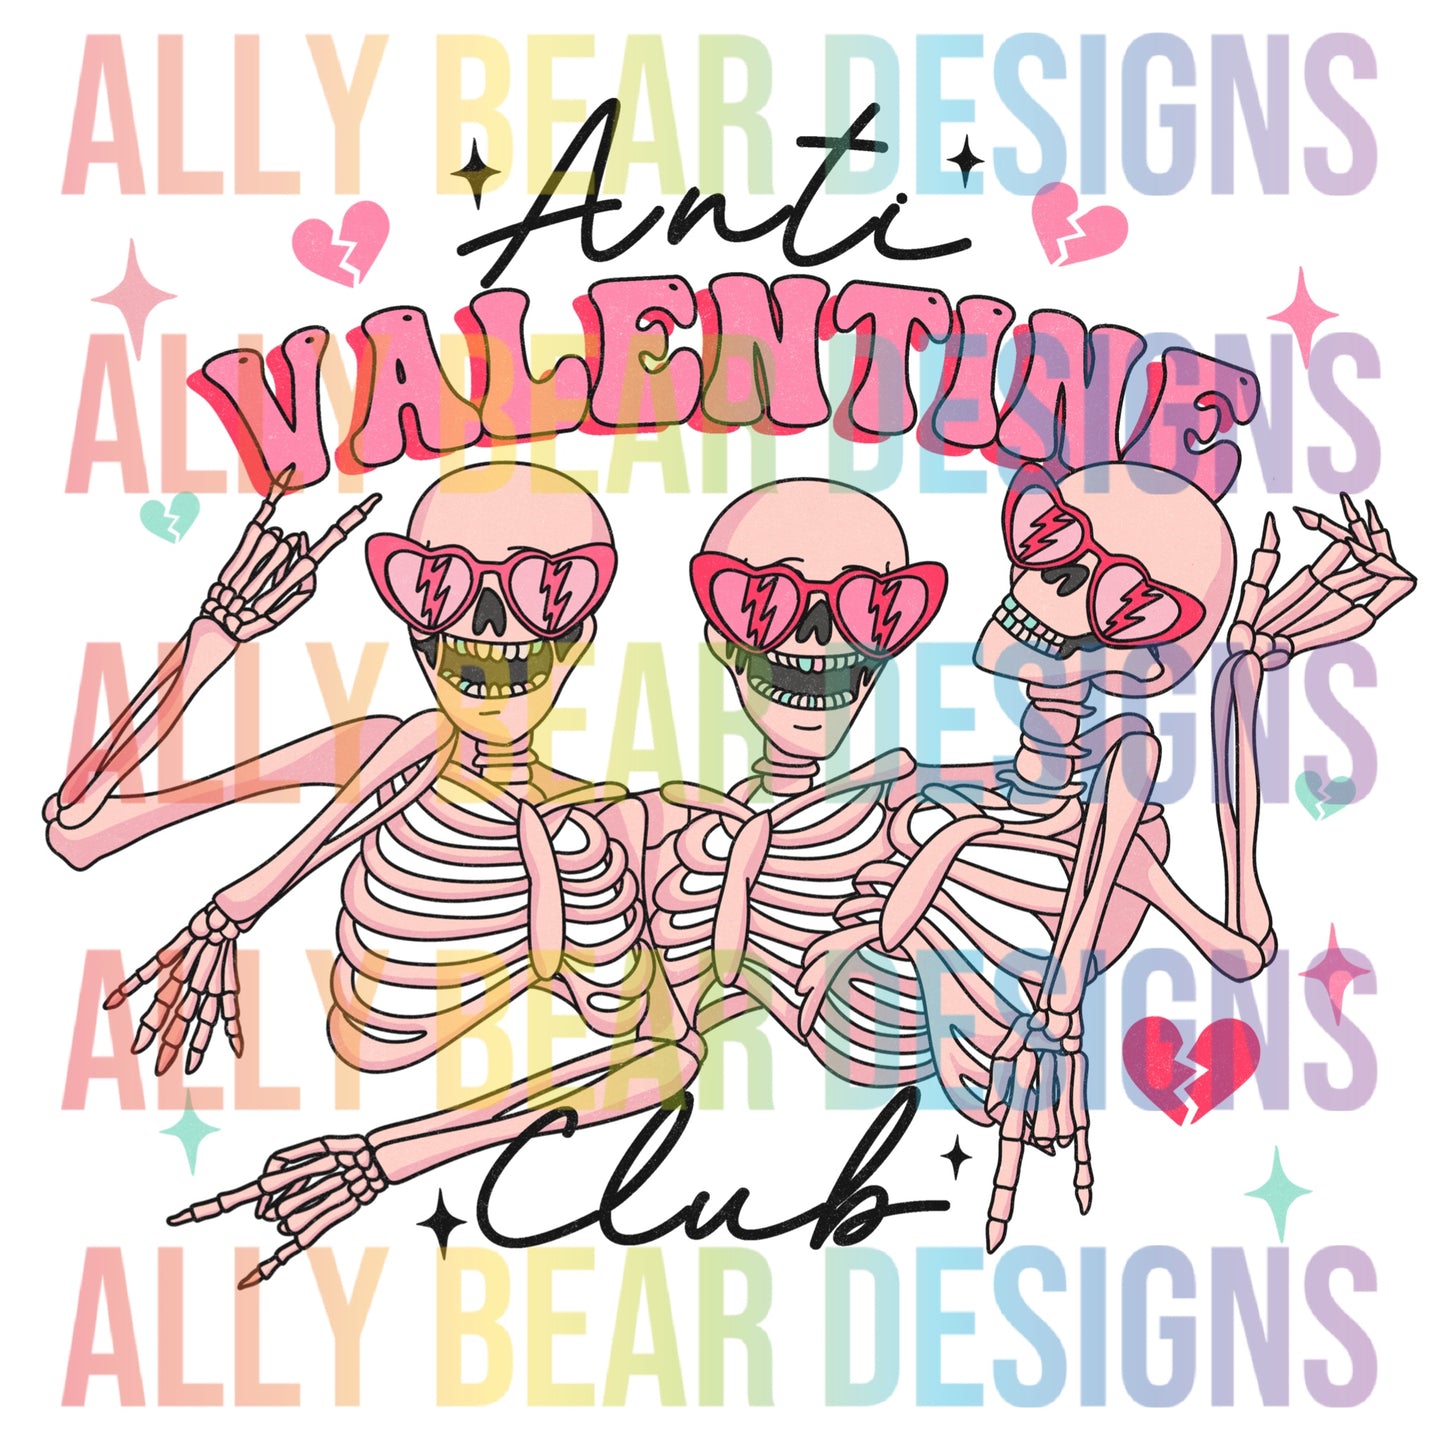 Anti-Valentine Club